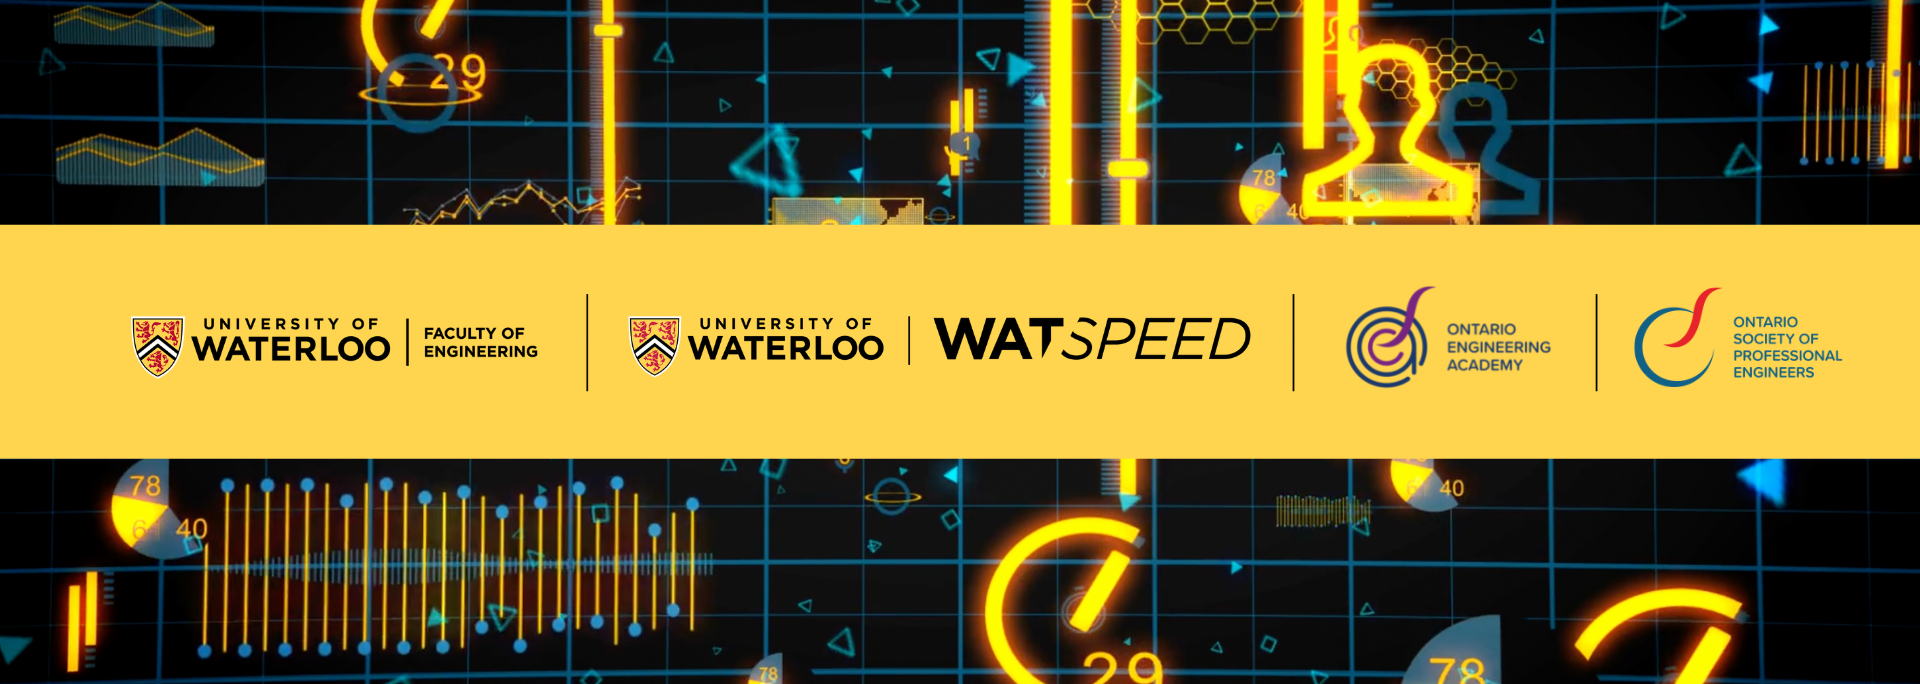 Logos for University of Waterloo, WatSPEED, Faculty of Engineering, Ontario Engineering Academy, and Ontario Society of Professional Engineers